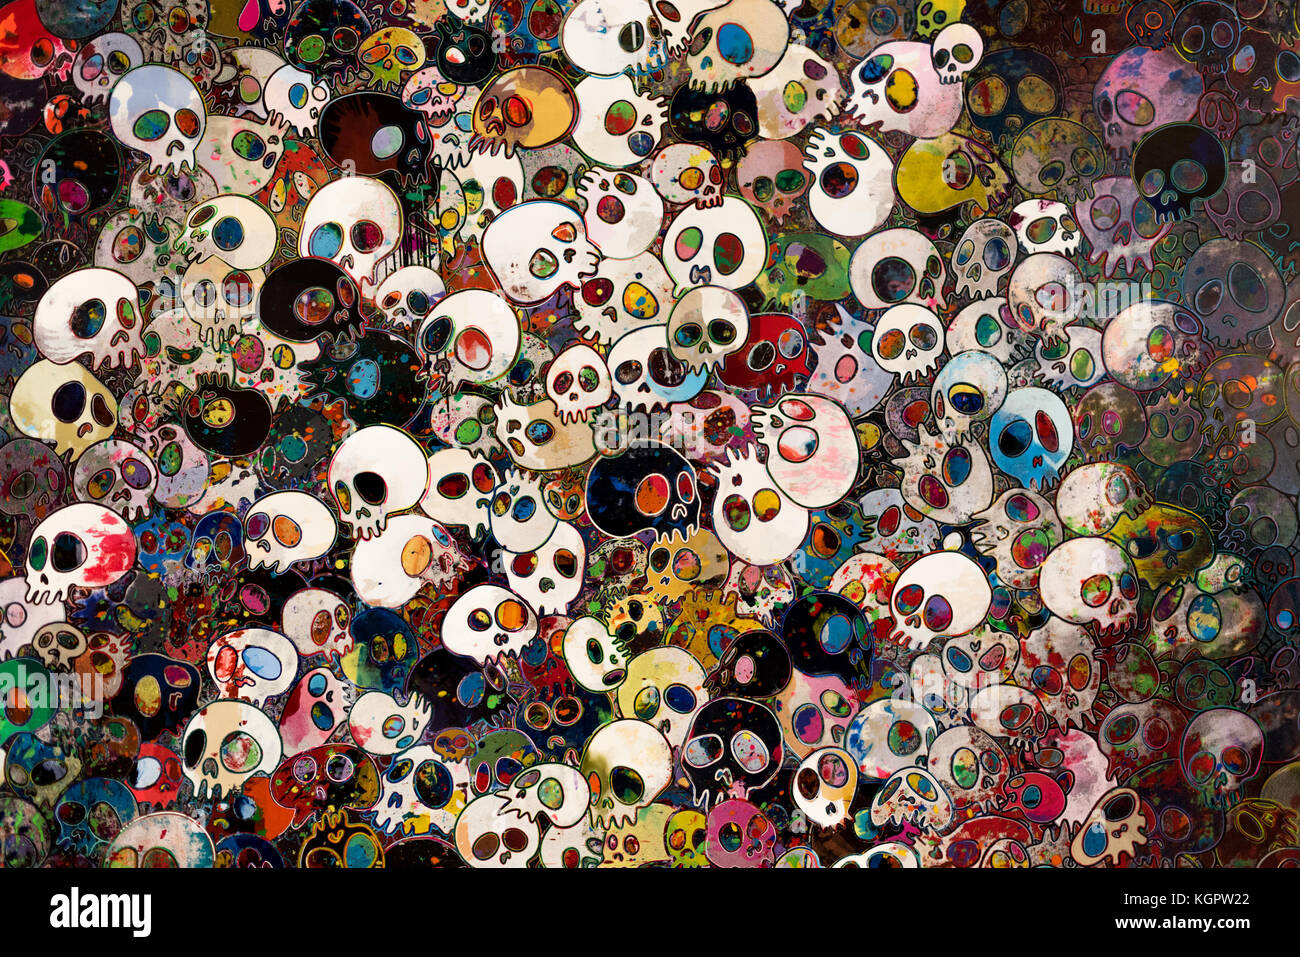 Takashi Murakami wallpapers taken at the Broad in Los Angeles